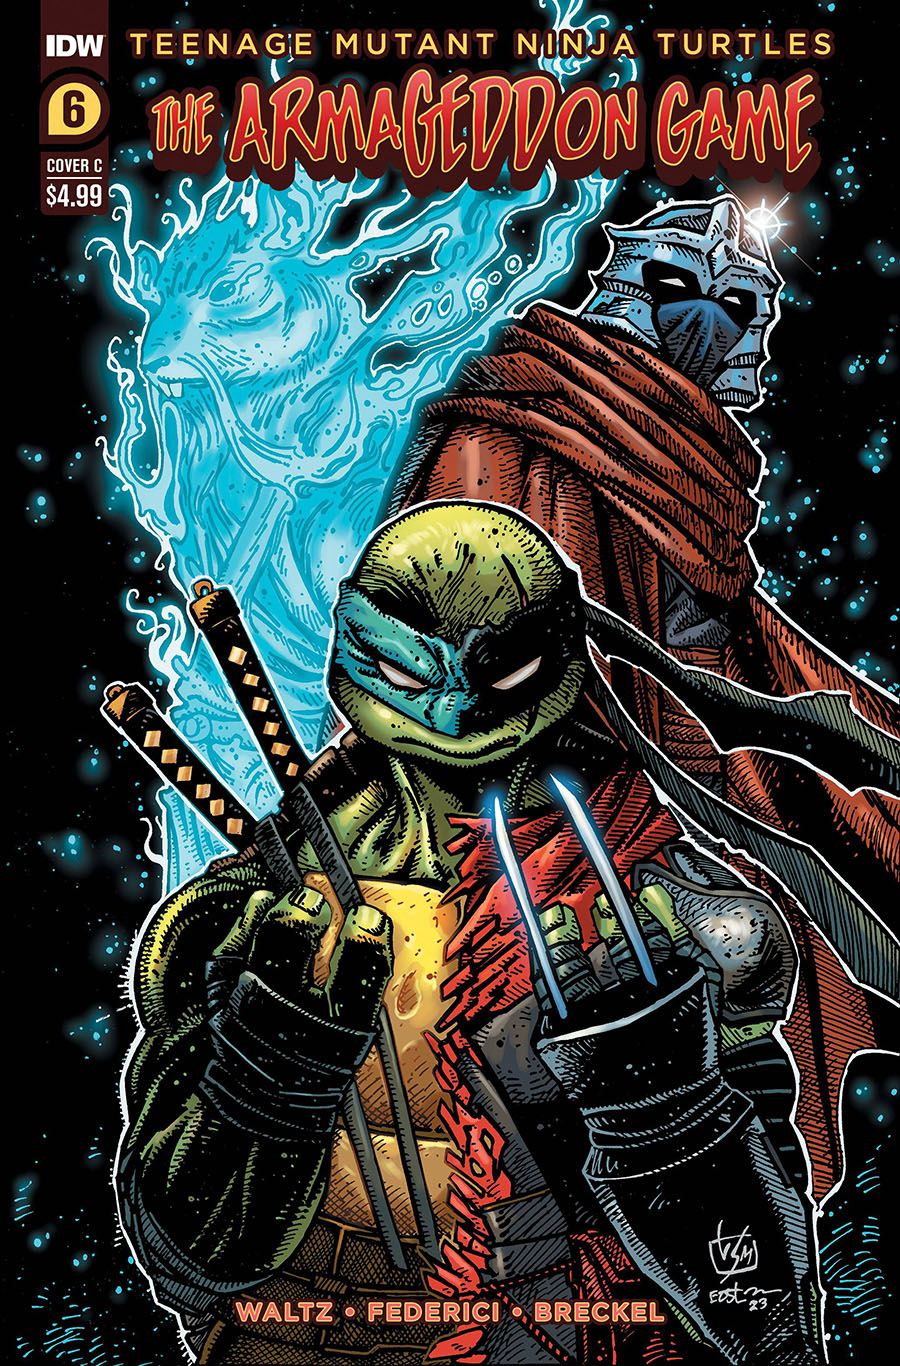 Teenage Mutant Ninja Turtles Armageddon Game #6 Cover C Variant Kevin Eastman Cover